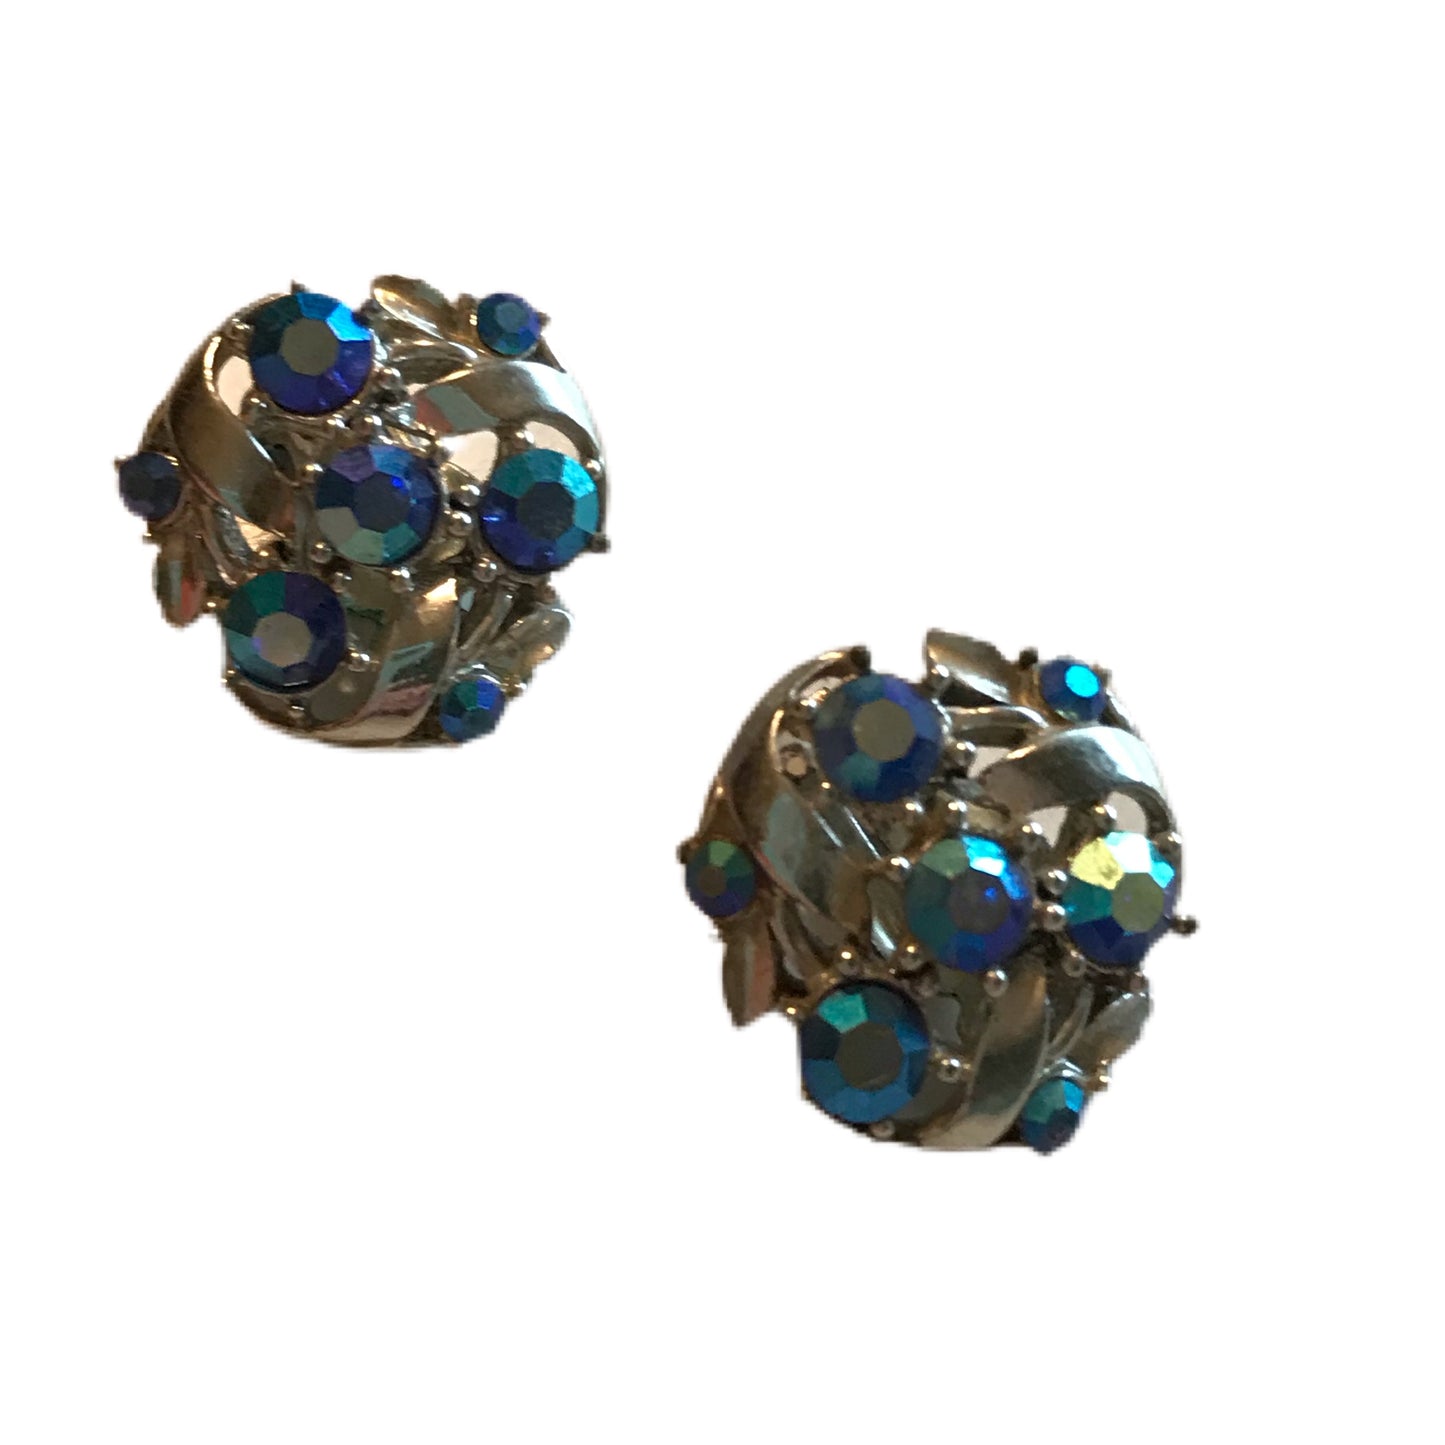 Aqua Rhinestone Silver Tone Clip Earrings circa 1960s